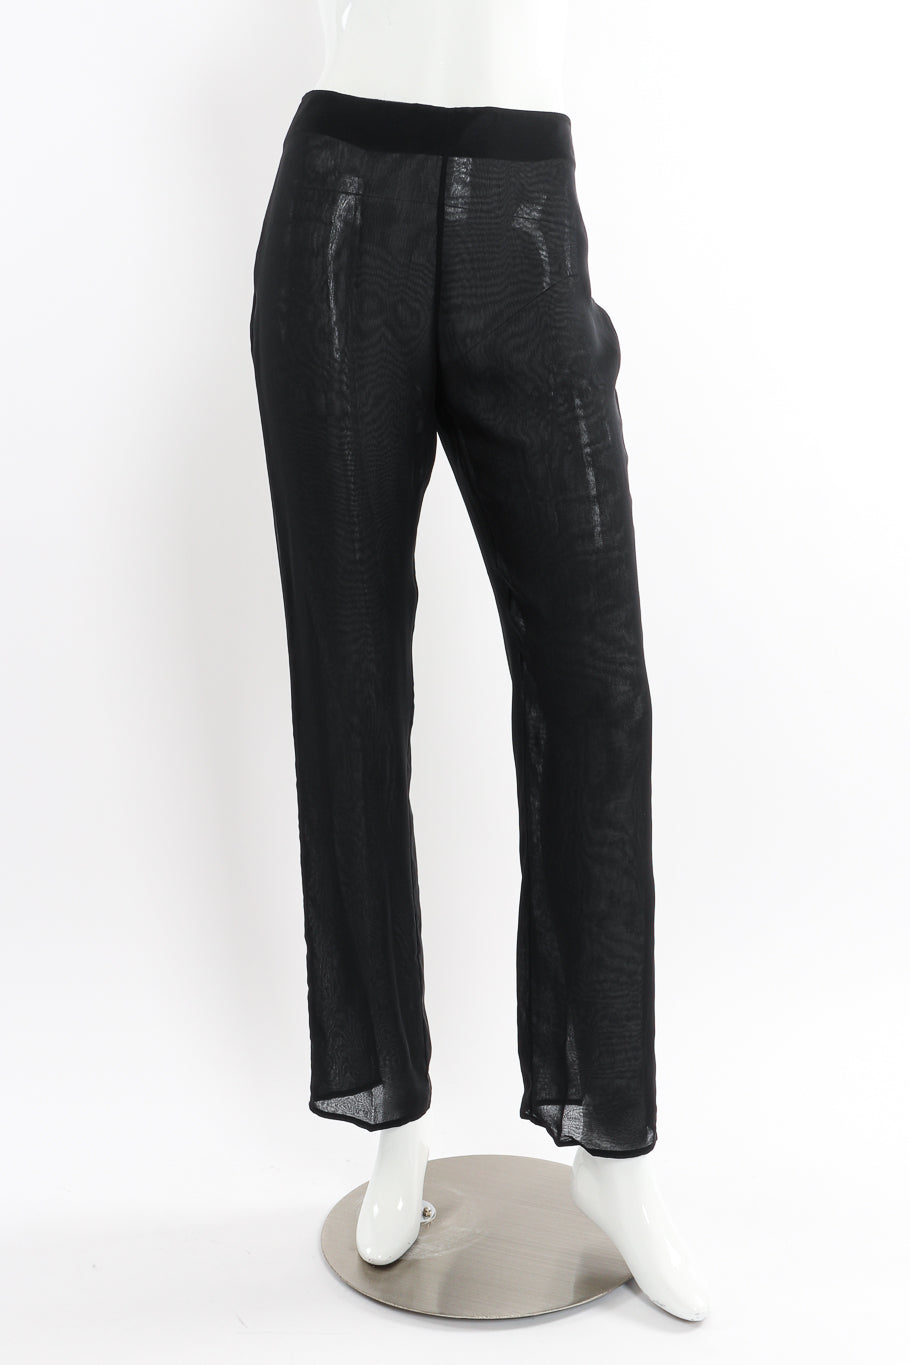 Vintage Richard Tyler Silk Bolero Top and Pants Set front view of pant on mannequin @Recessla